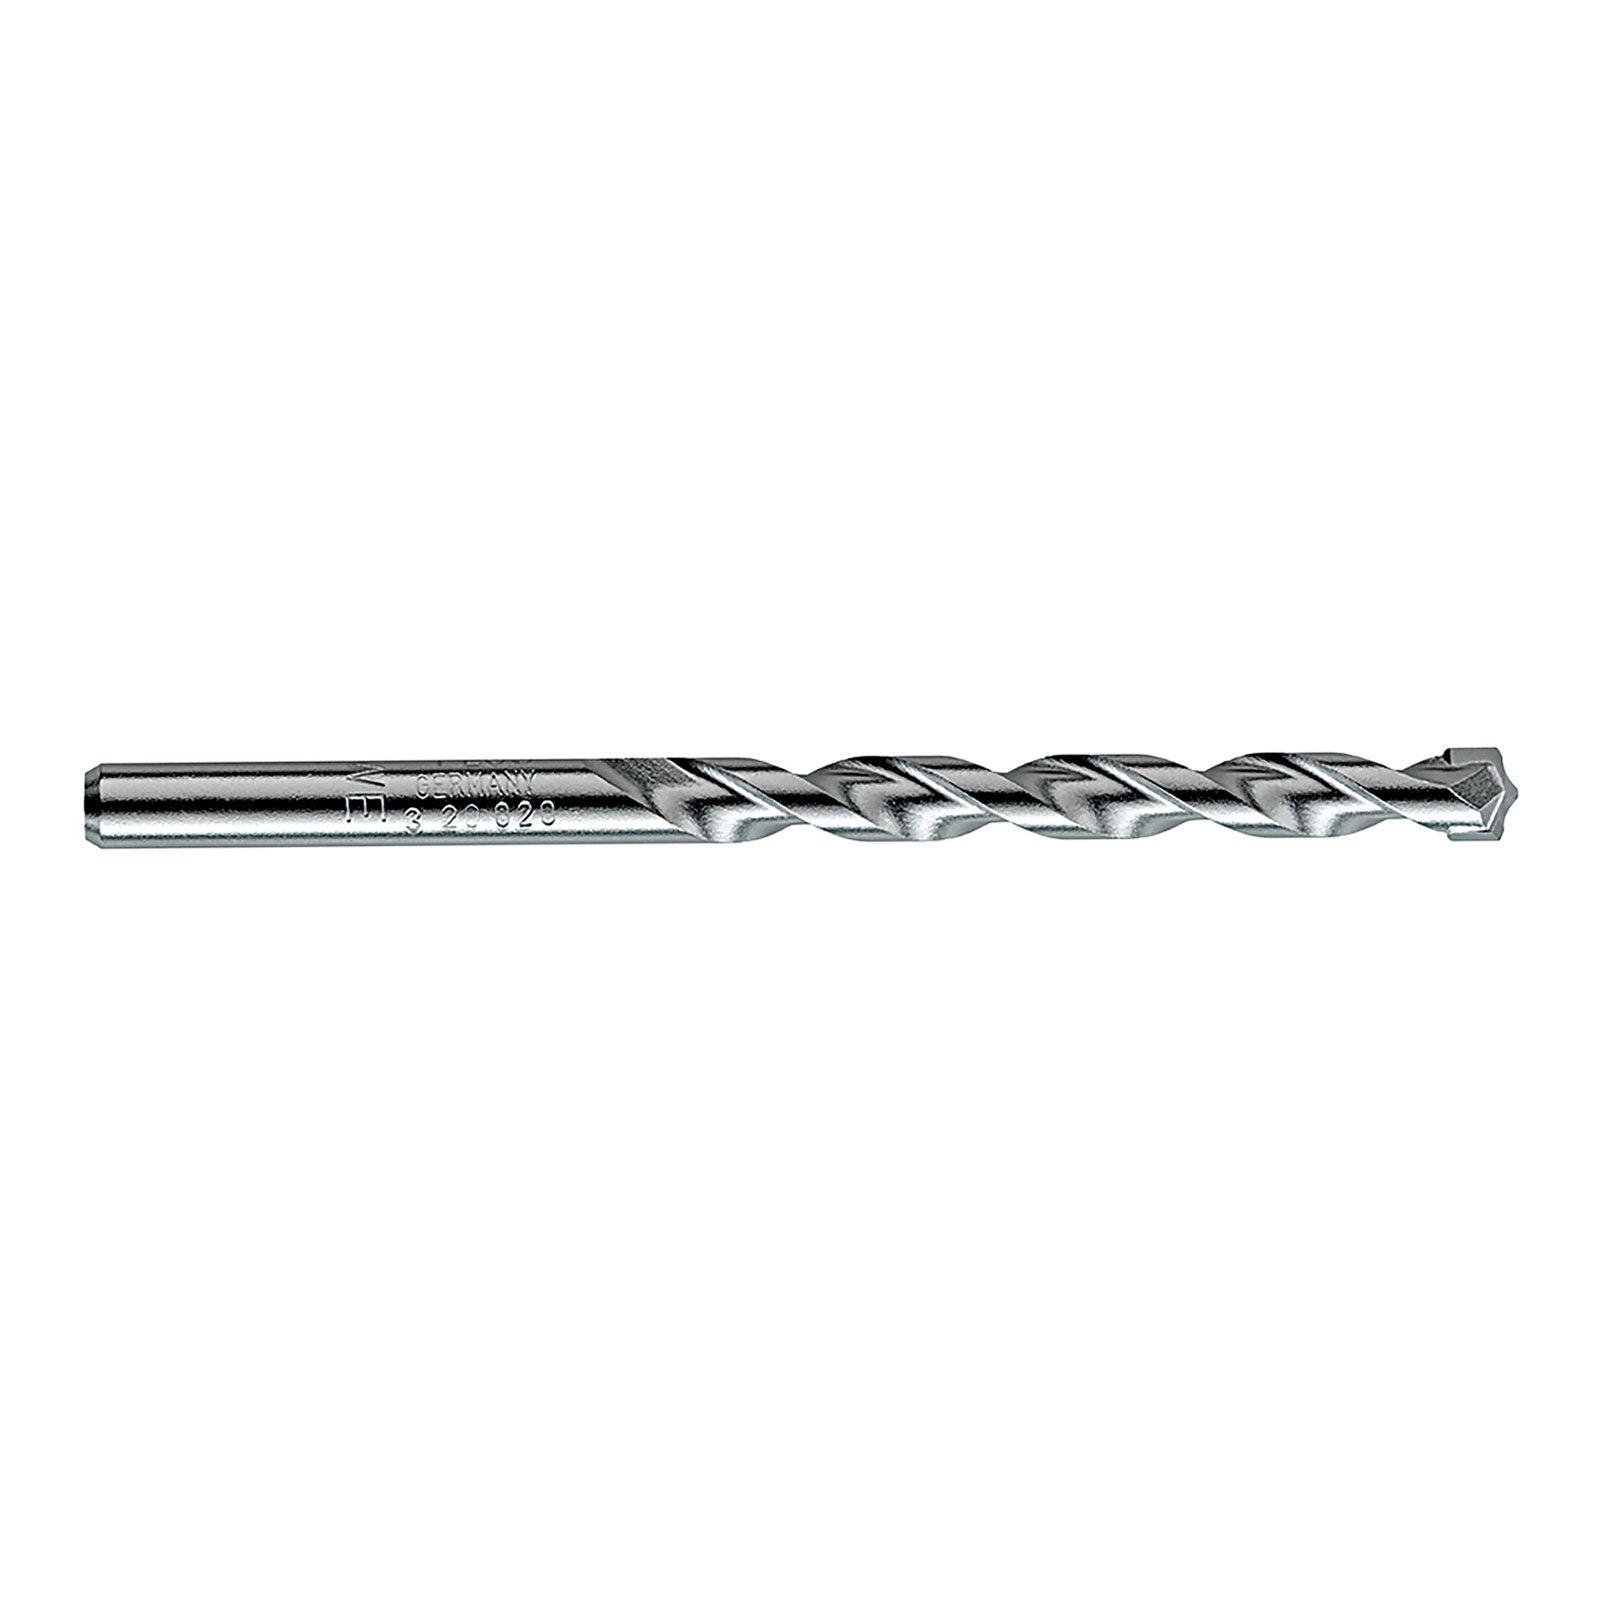 14 inch x 12 inch Simpson Straight Shank Masonry Drill Bit Carbide Tip Pkg 1